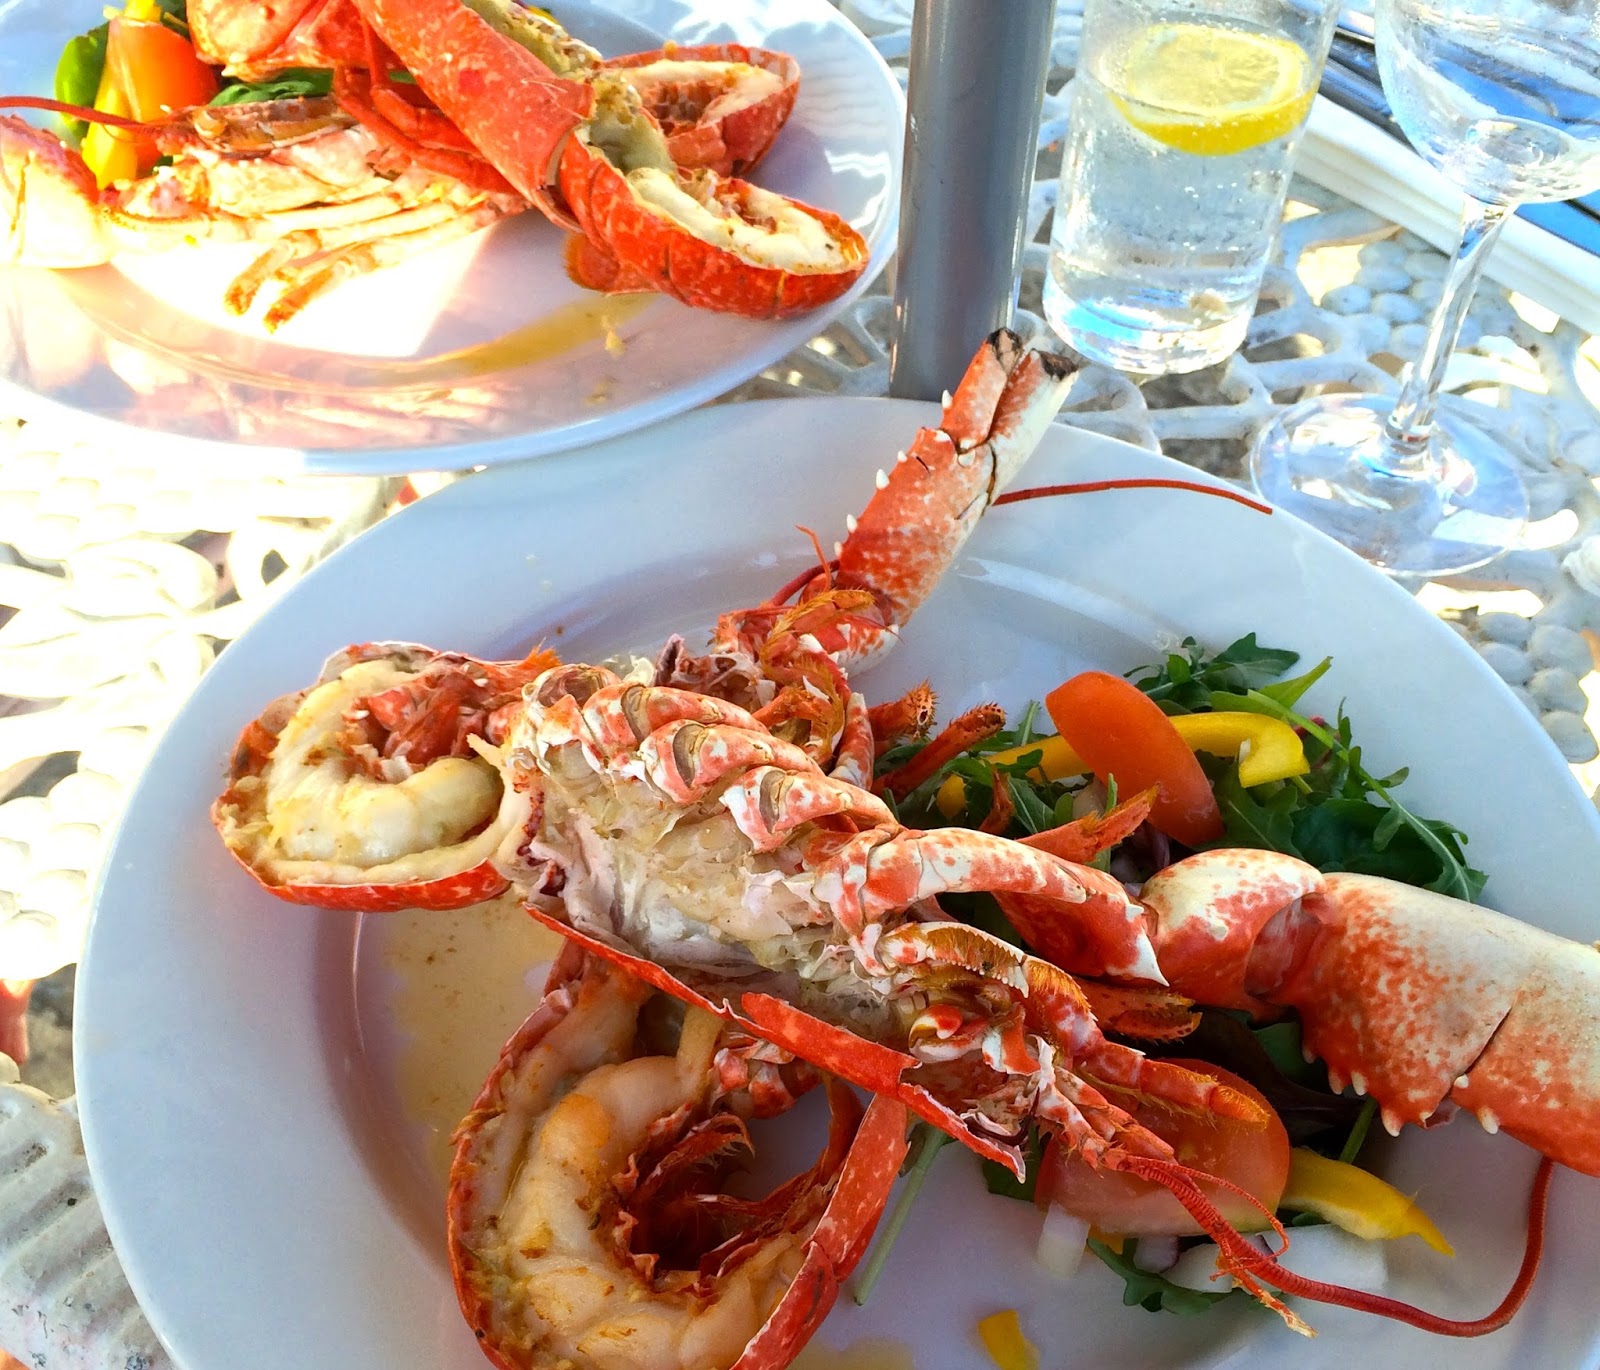 Lobster at Lulworth Cove, food bloggers, UK lifestyle blog